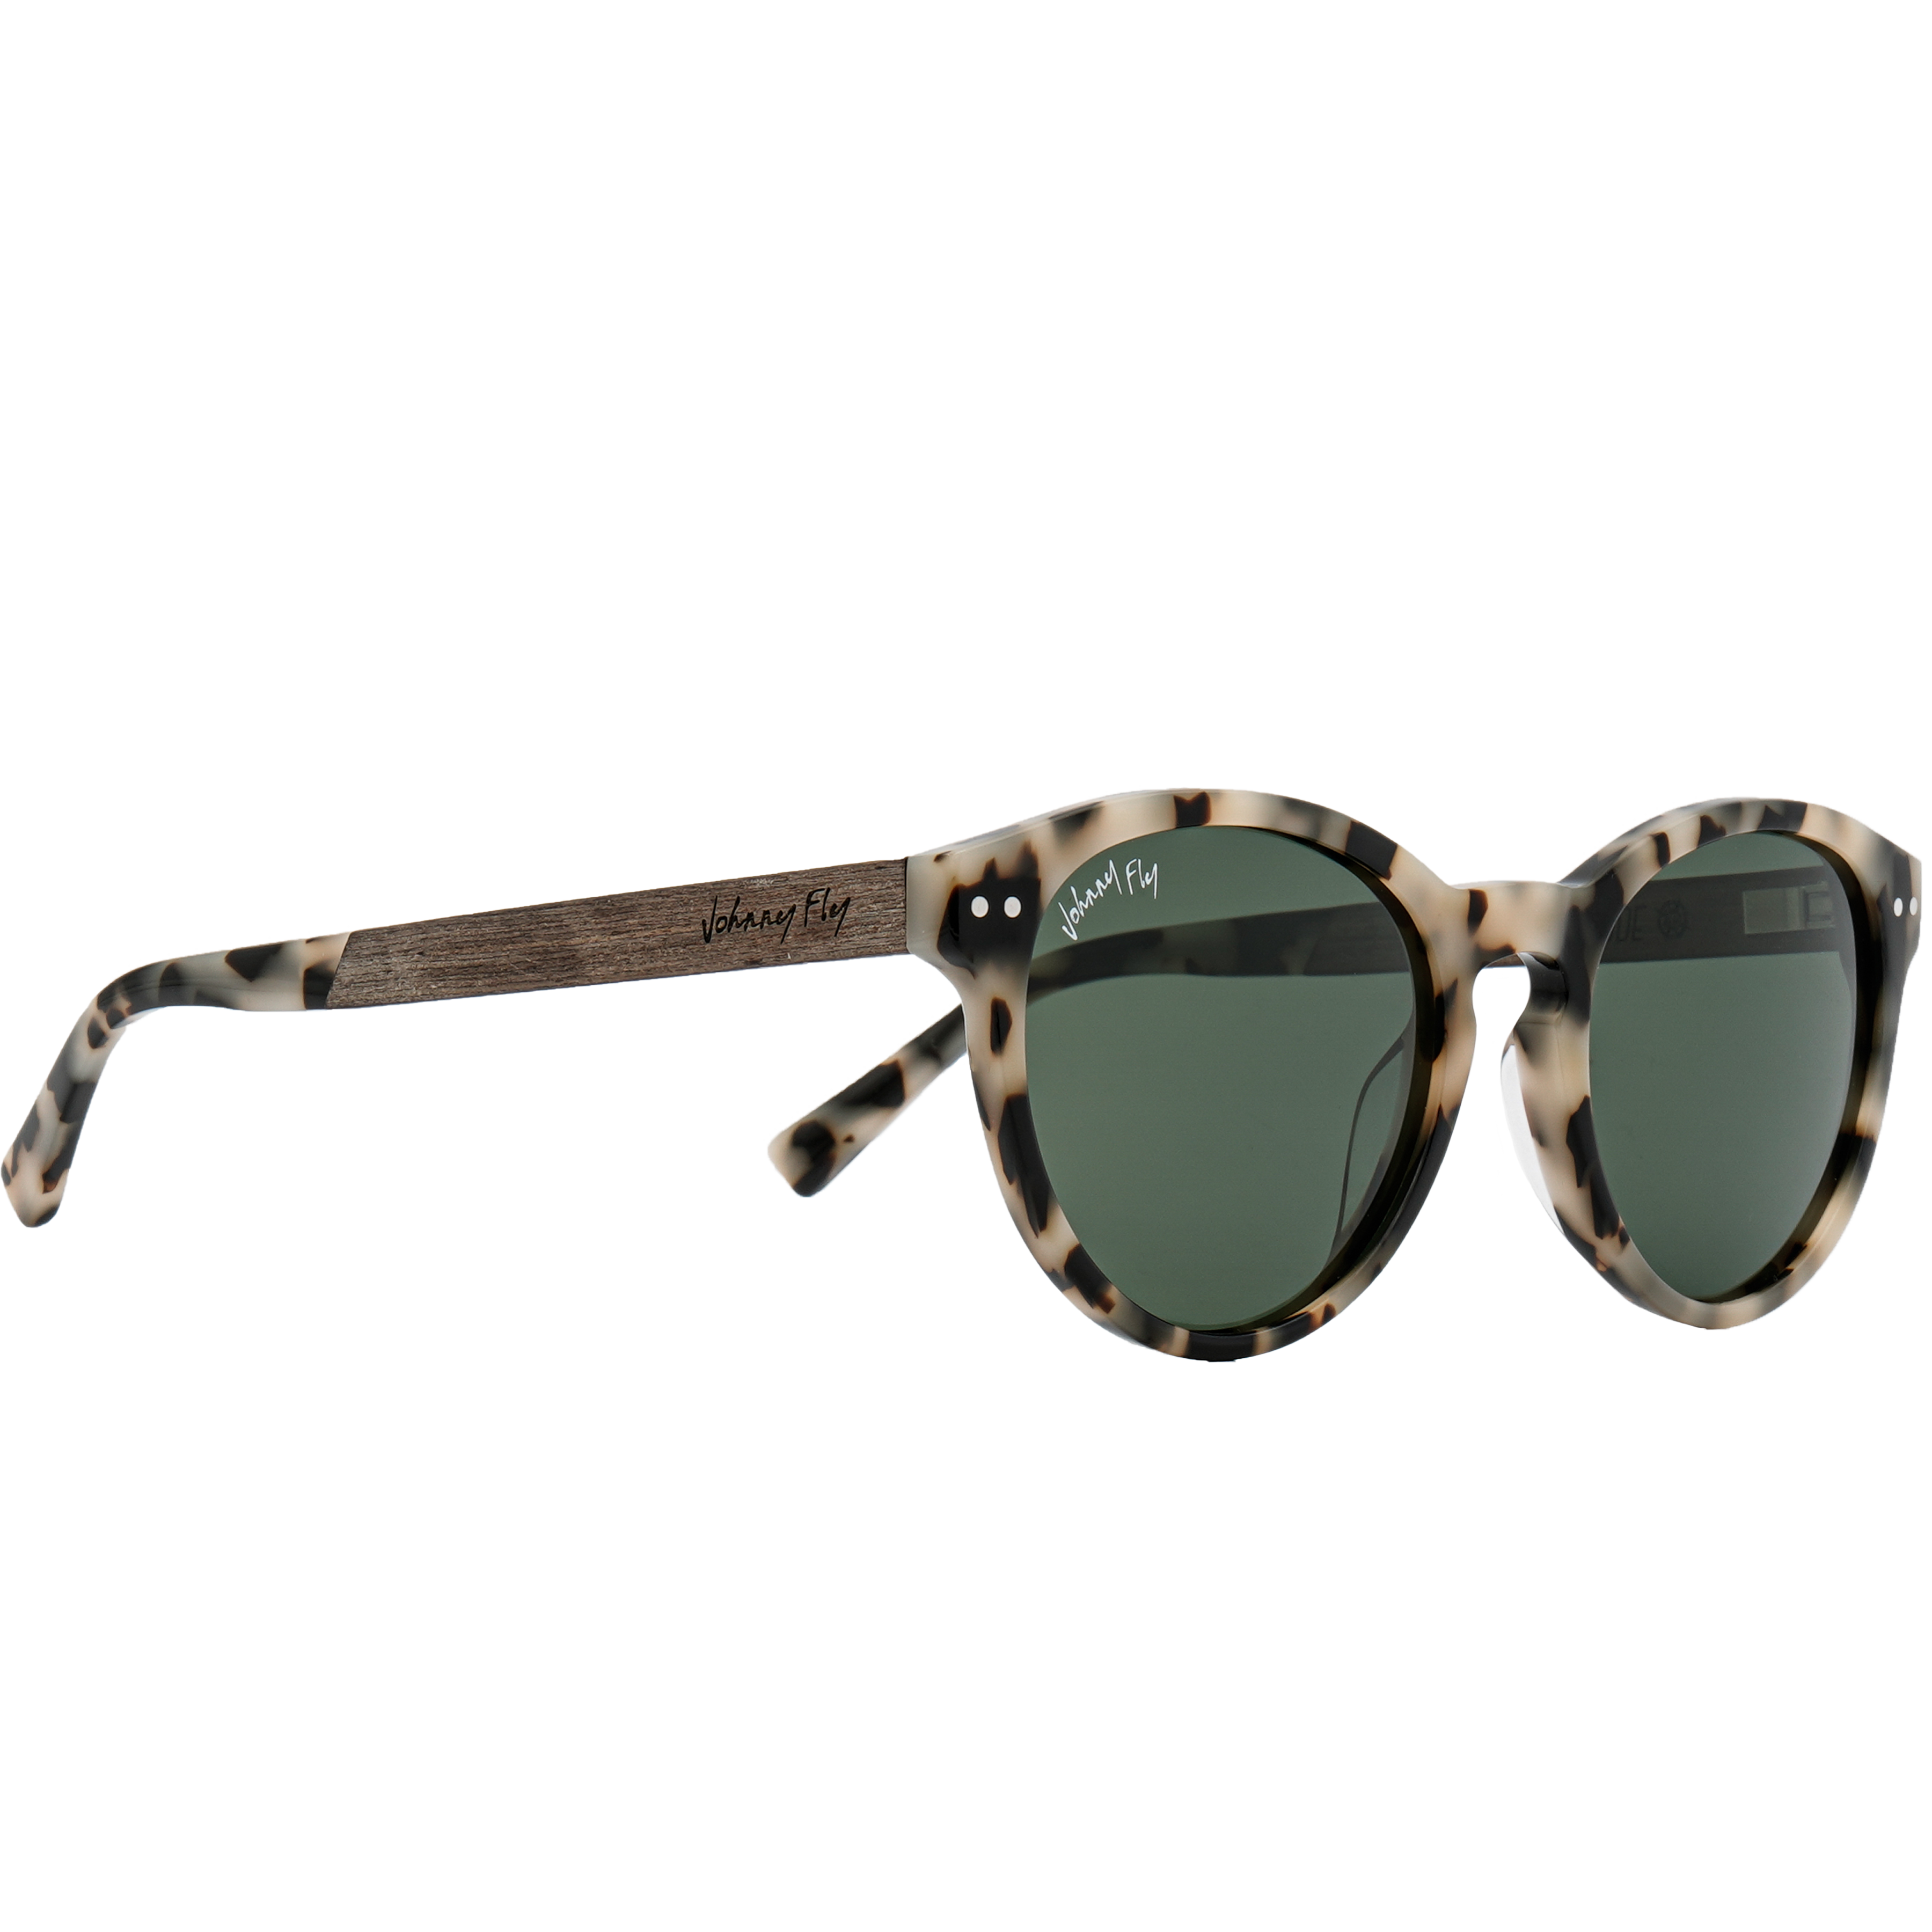 Latitude Sunglasses by Johnny Fly